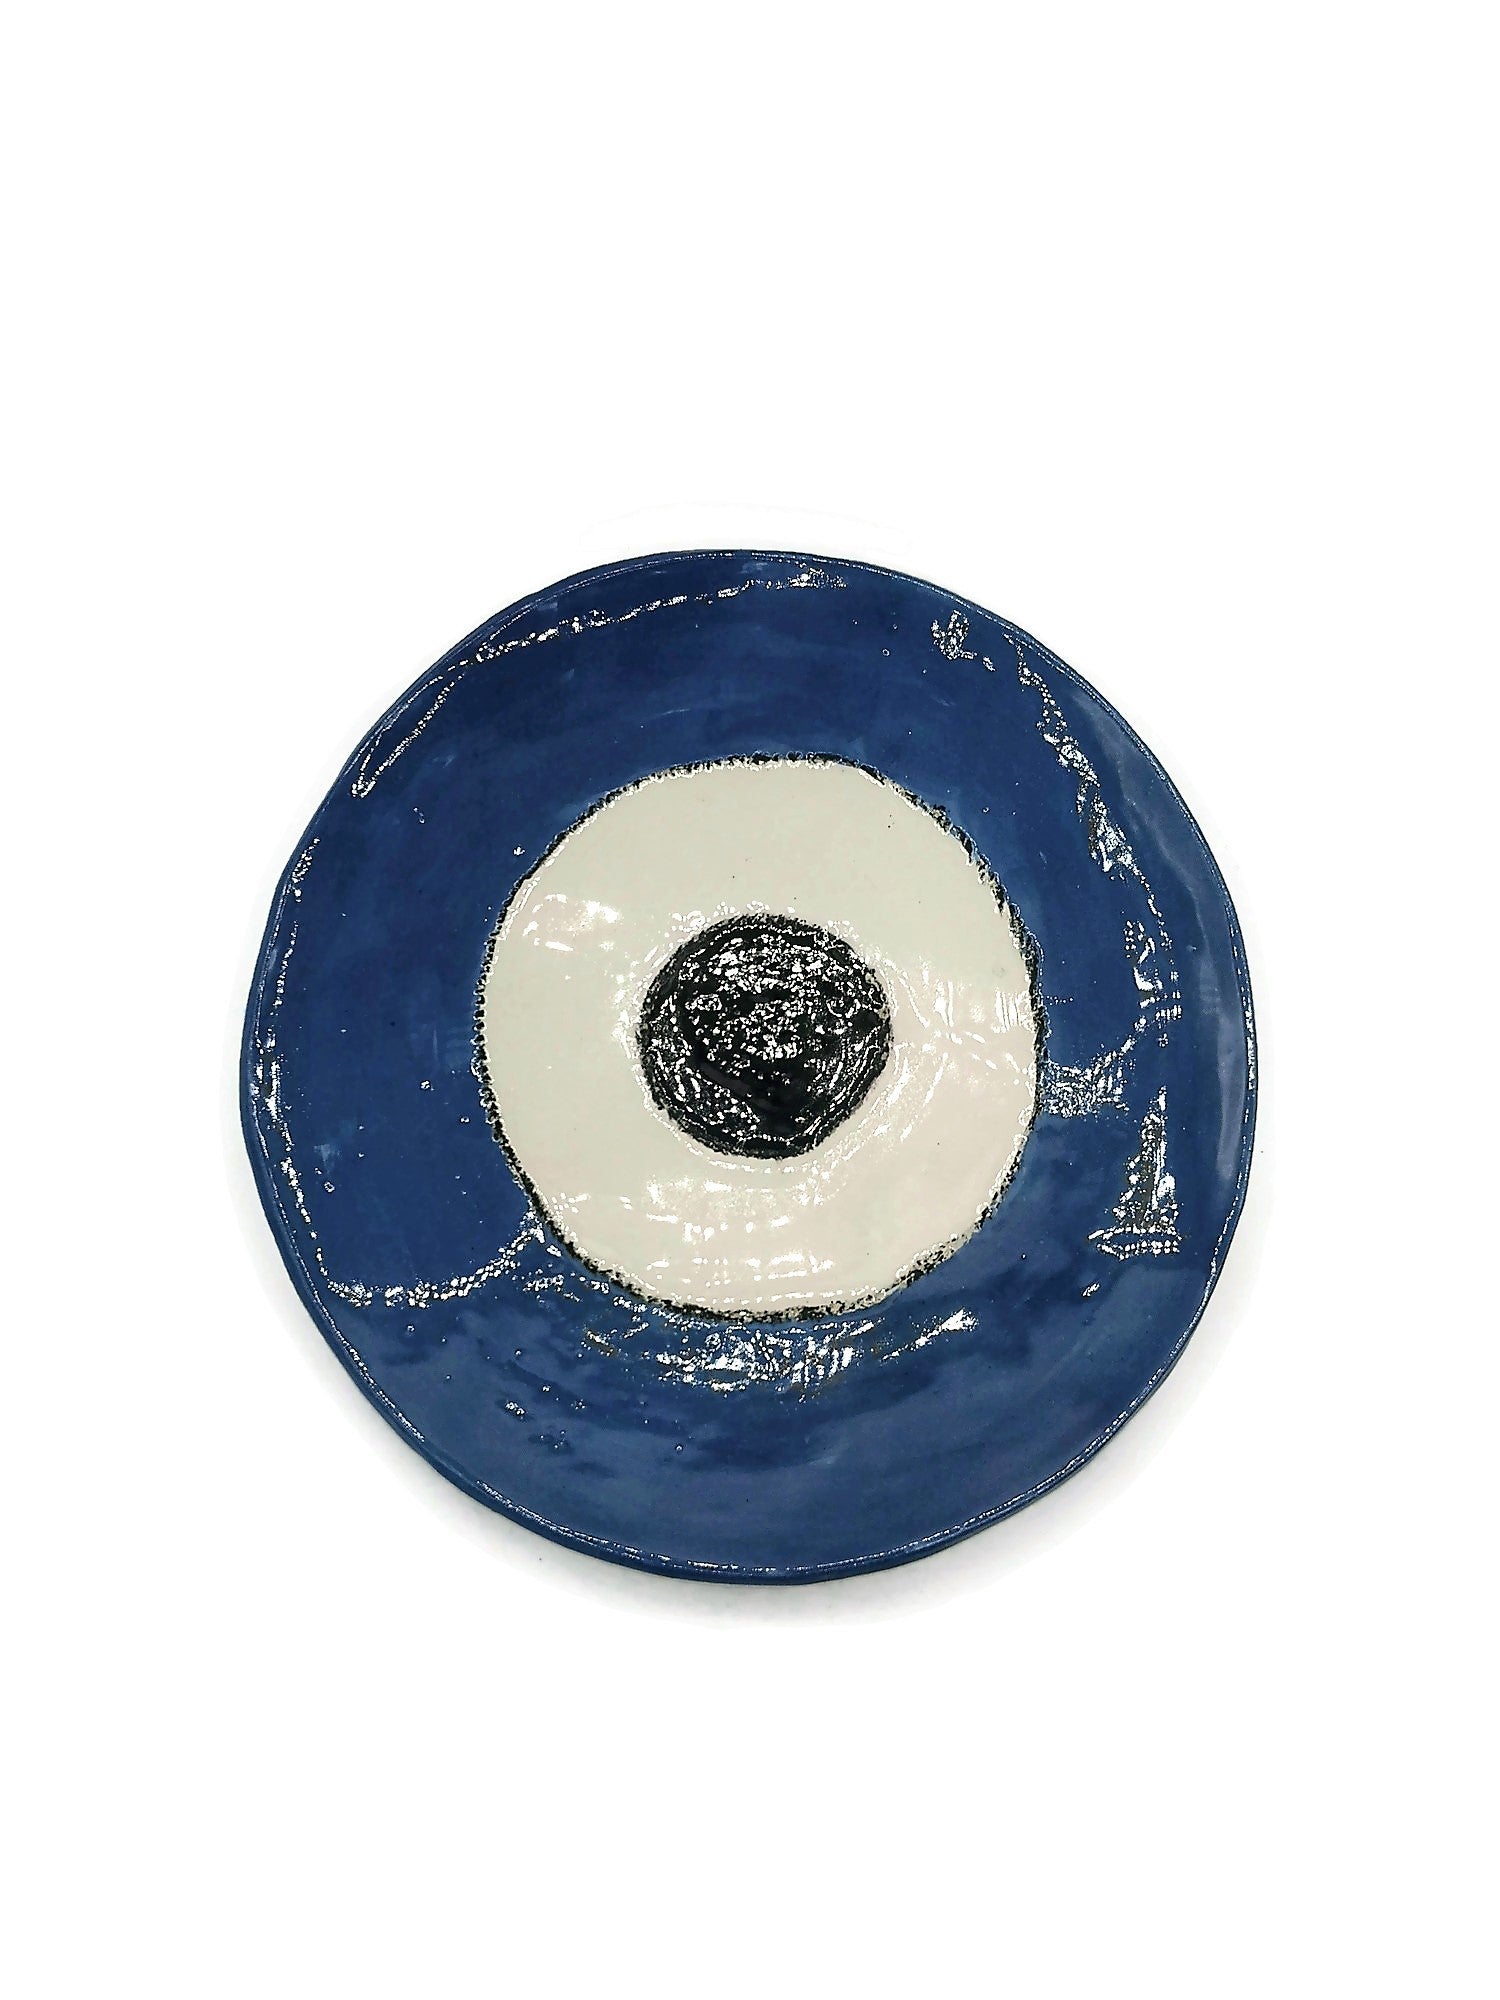 Handmade Ceramic Blue Evil Eye Decorative Plate For Display, Custom 9th anniversary gift for wife, Portuguese wall decor living room - Ceramica Ana Rafael